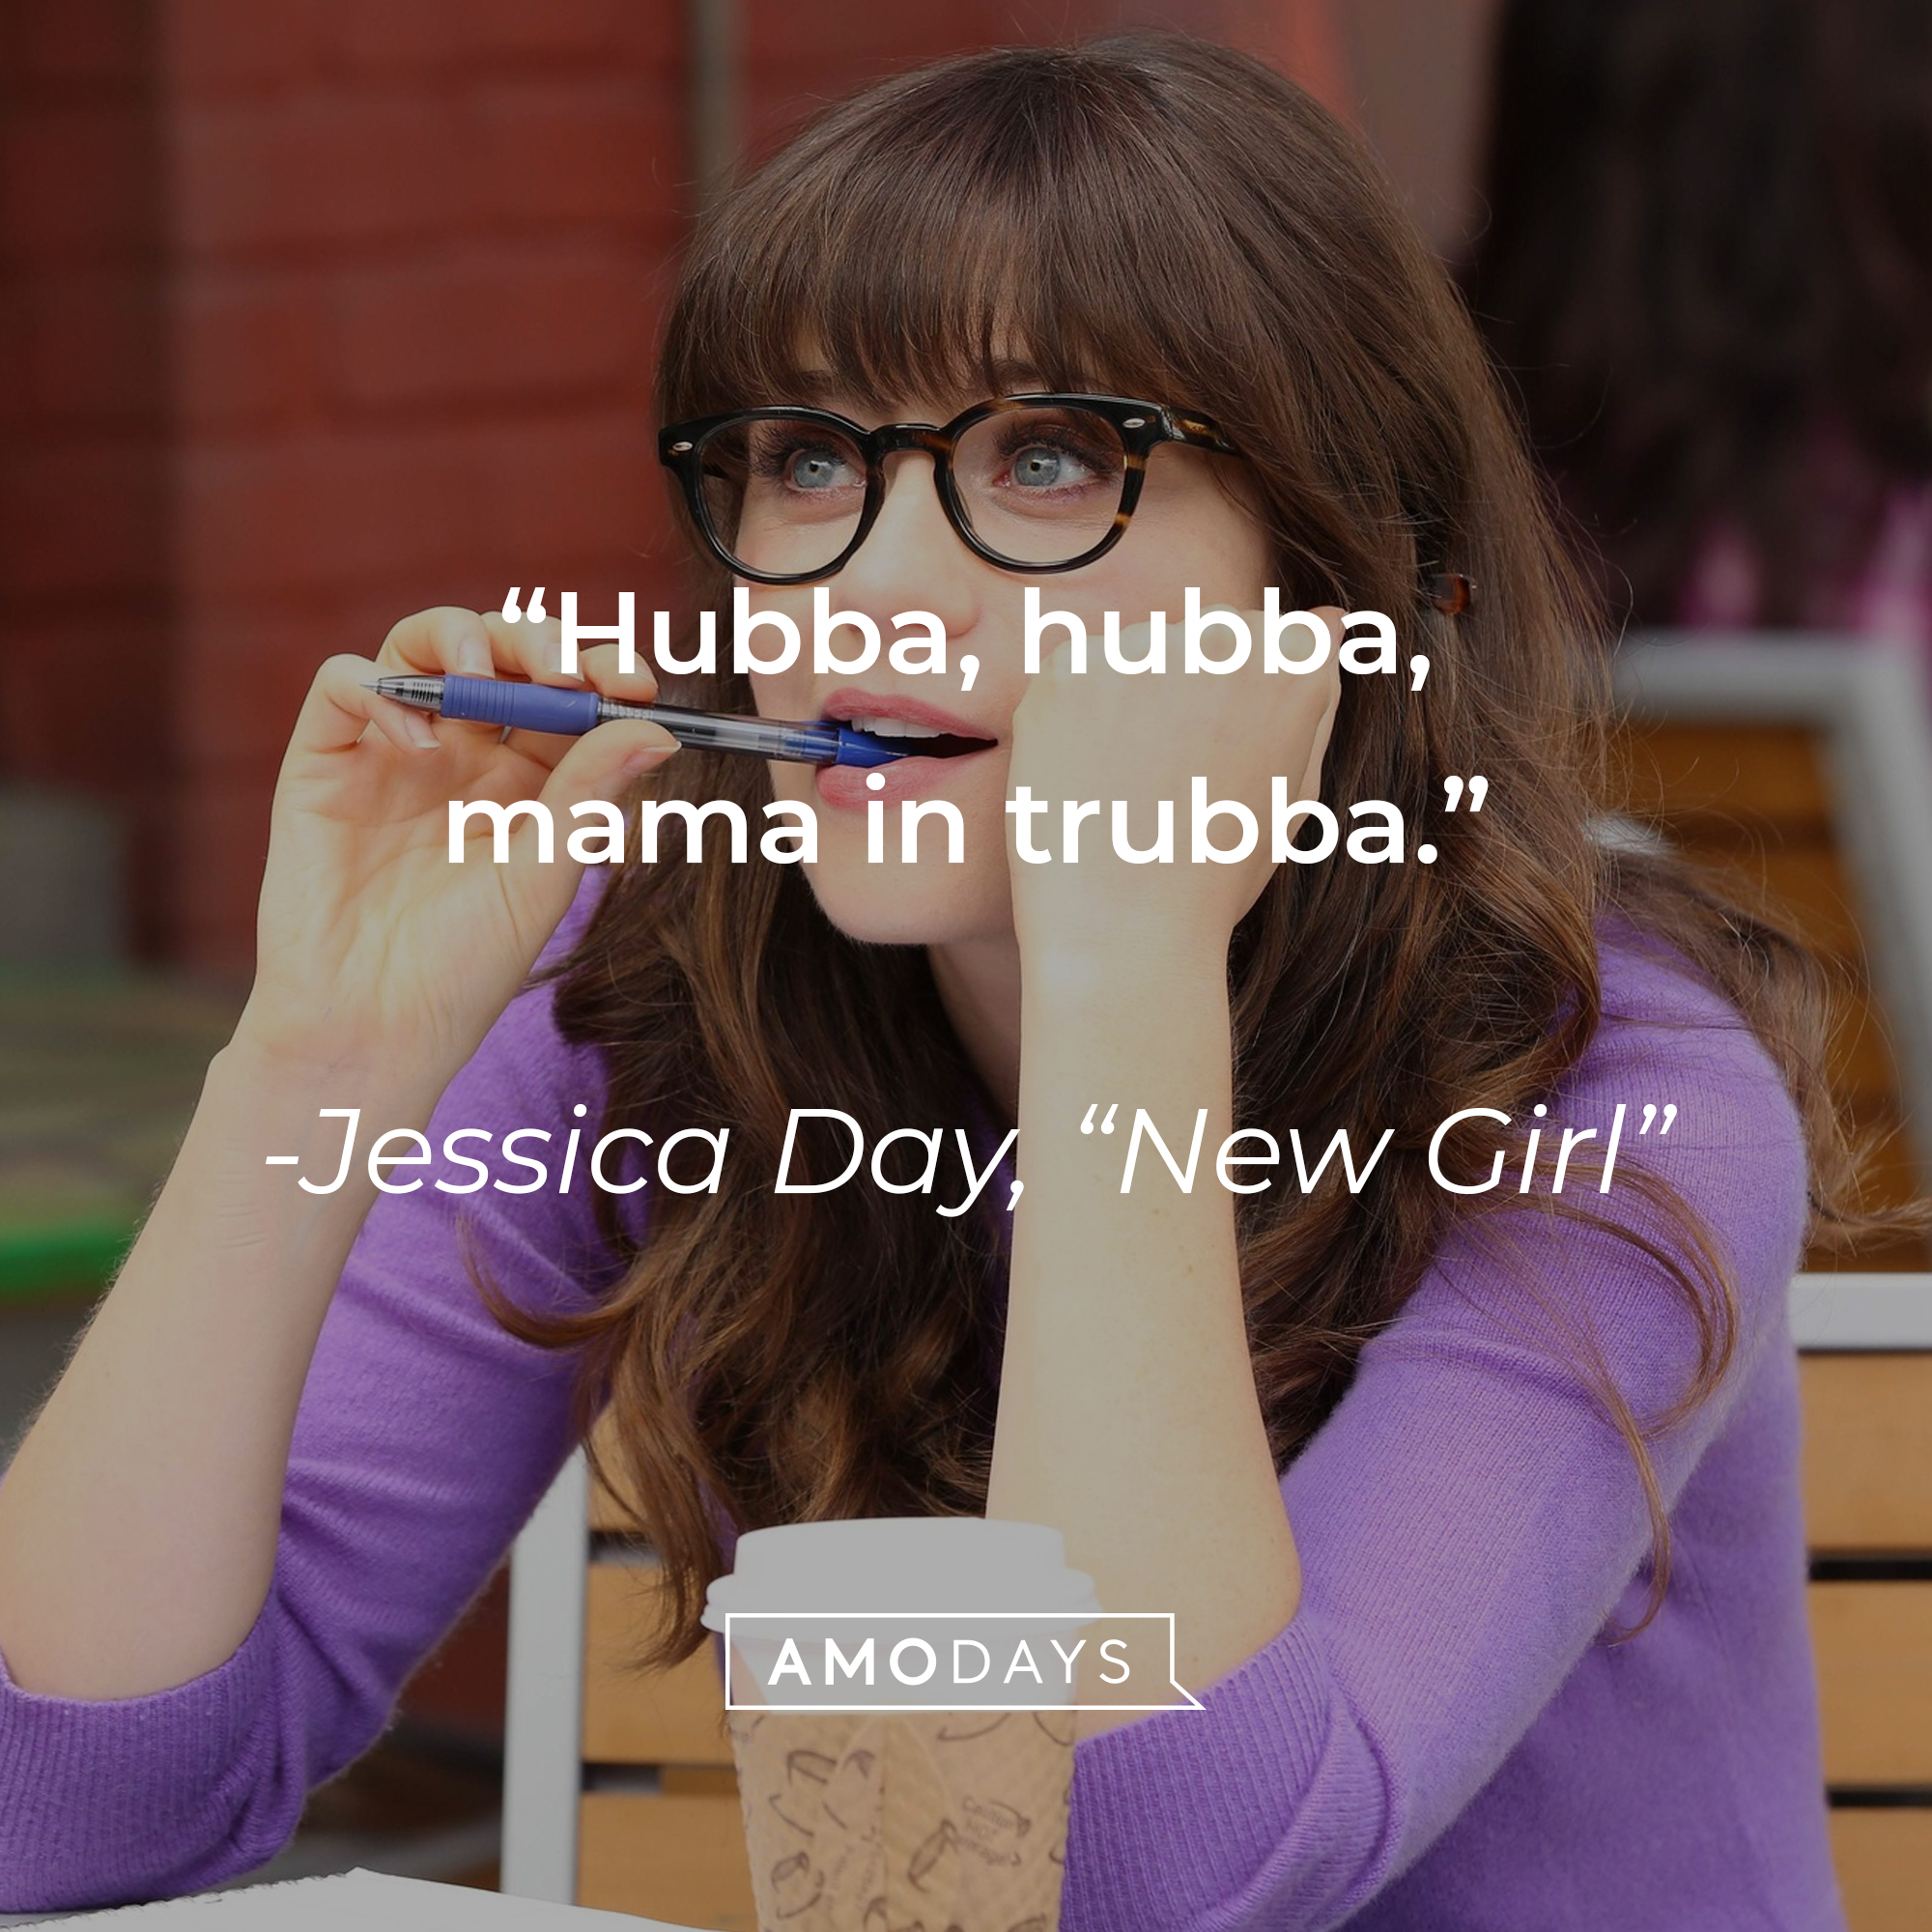 Jessica Day’s quote from “New Girl”: “Hubba, hubba, mama in trubba.” | Source: facebook.com/OfficialNewGirl